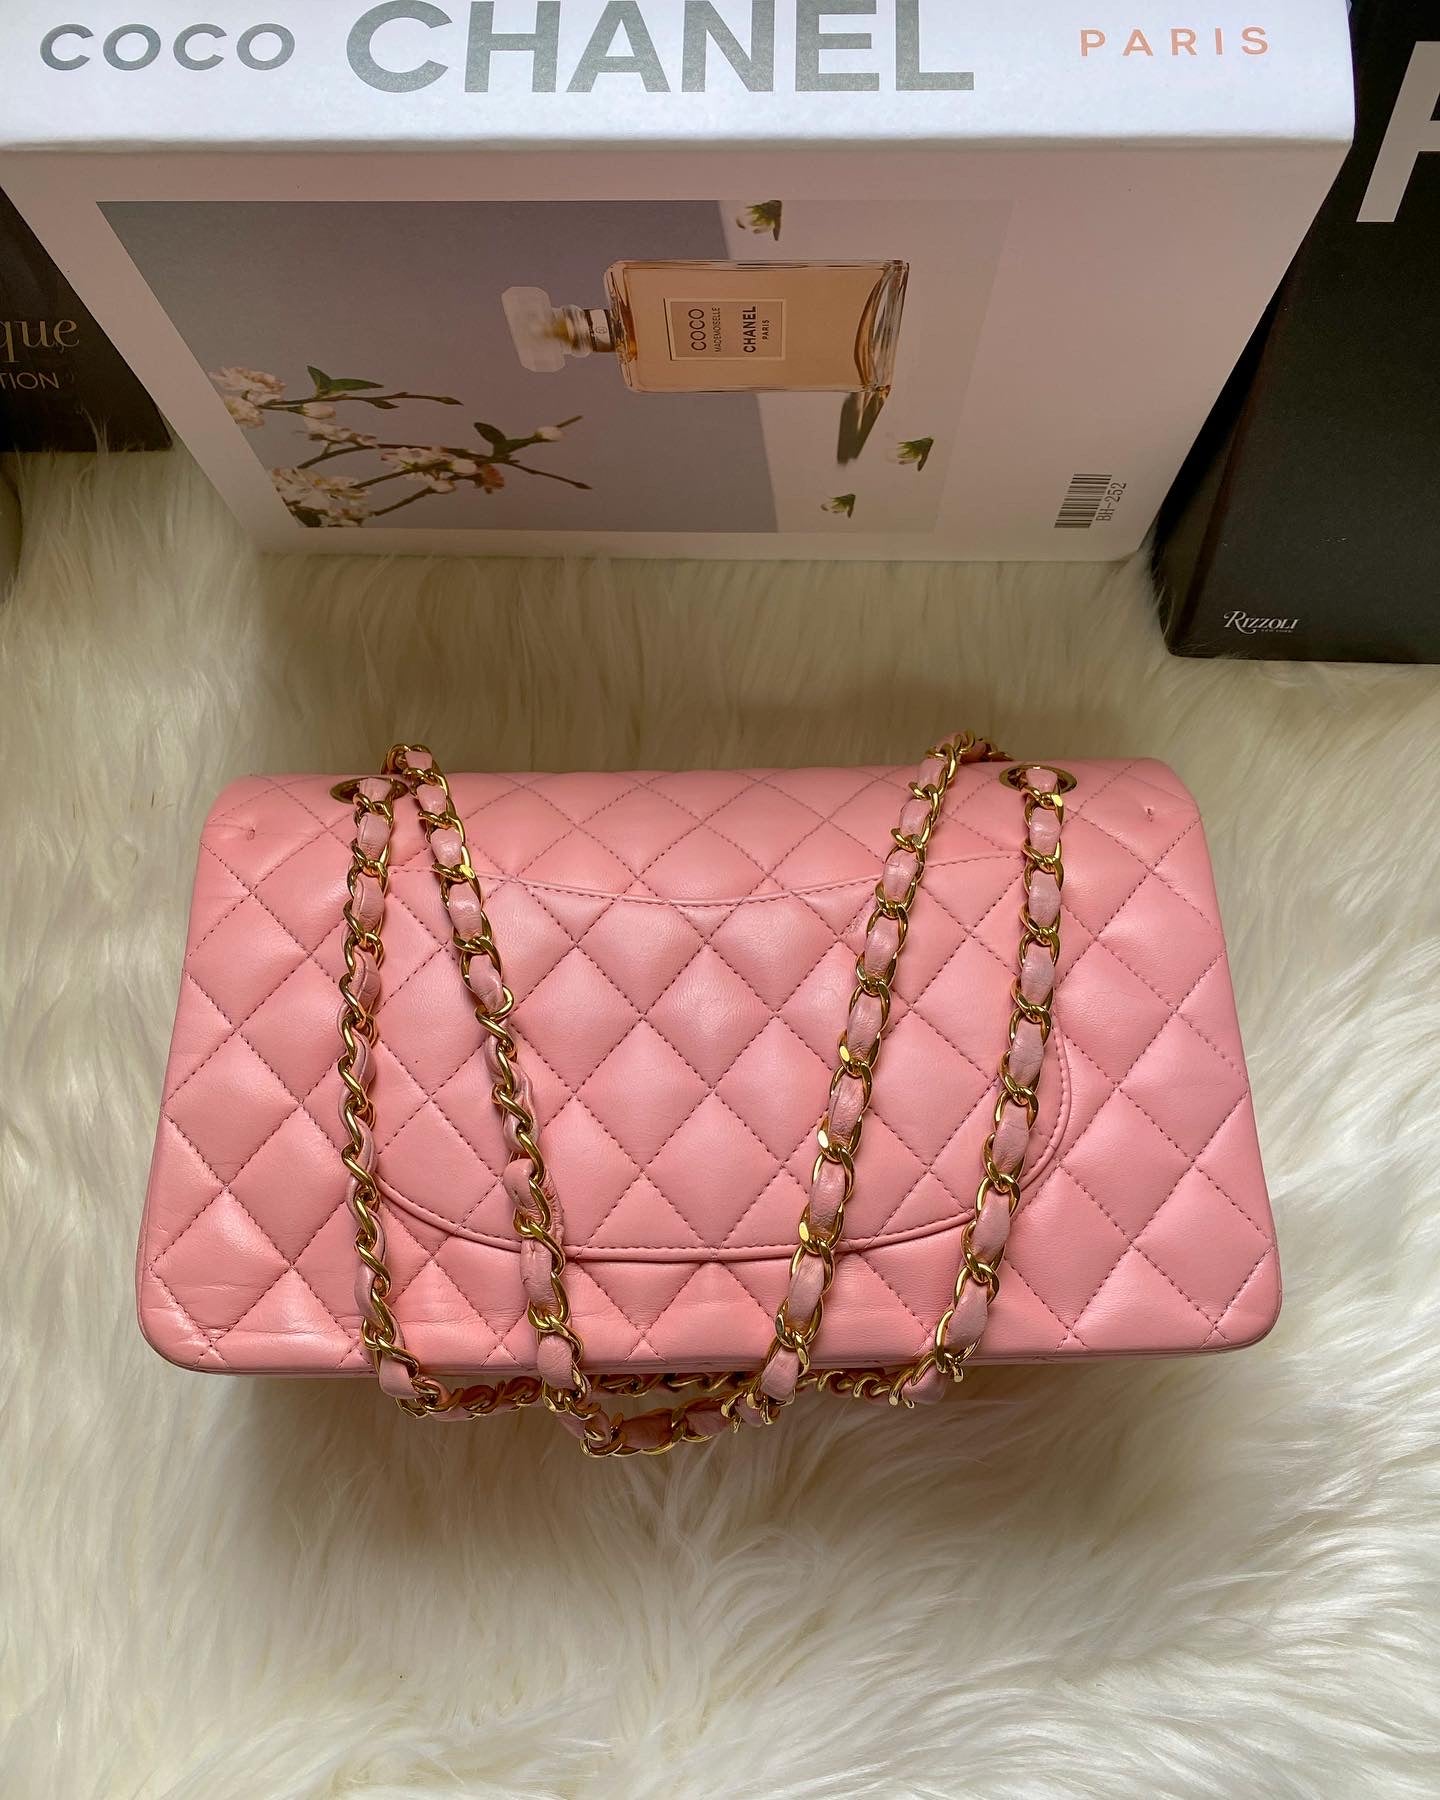 Chanel Handbags Classic - Shop on Pinterest